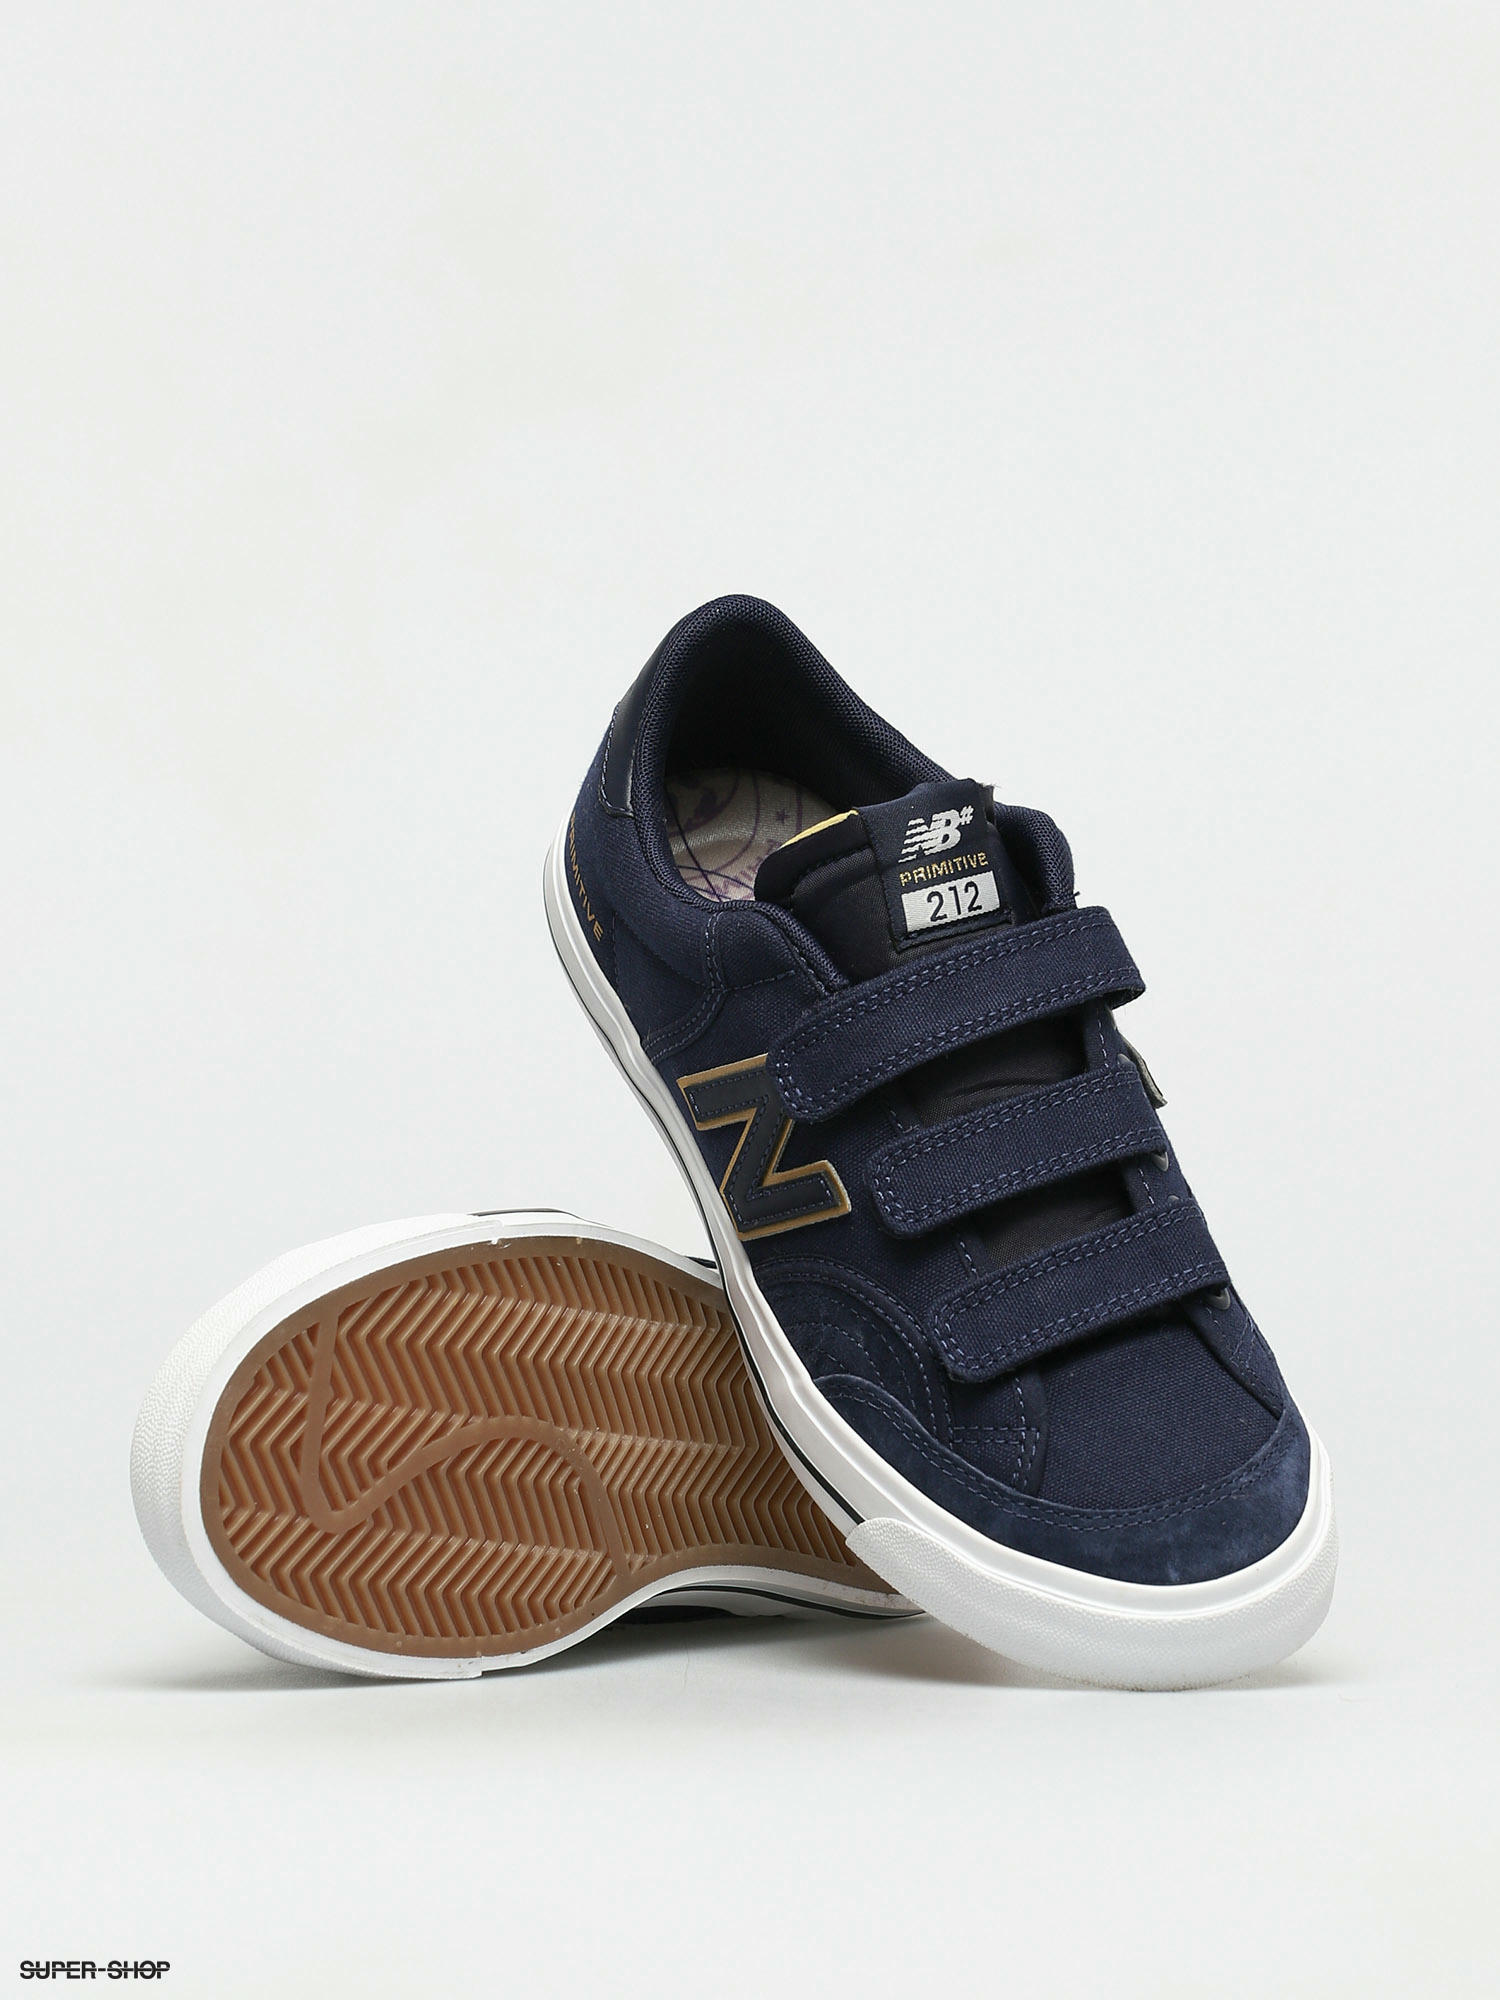 New Balance X Primitive 212 Shoes (navy gold)